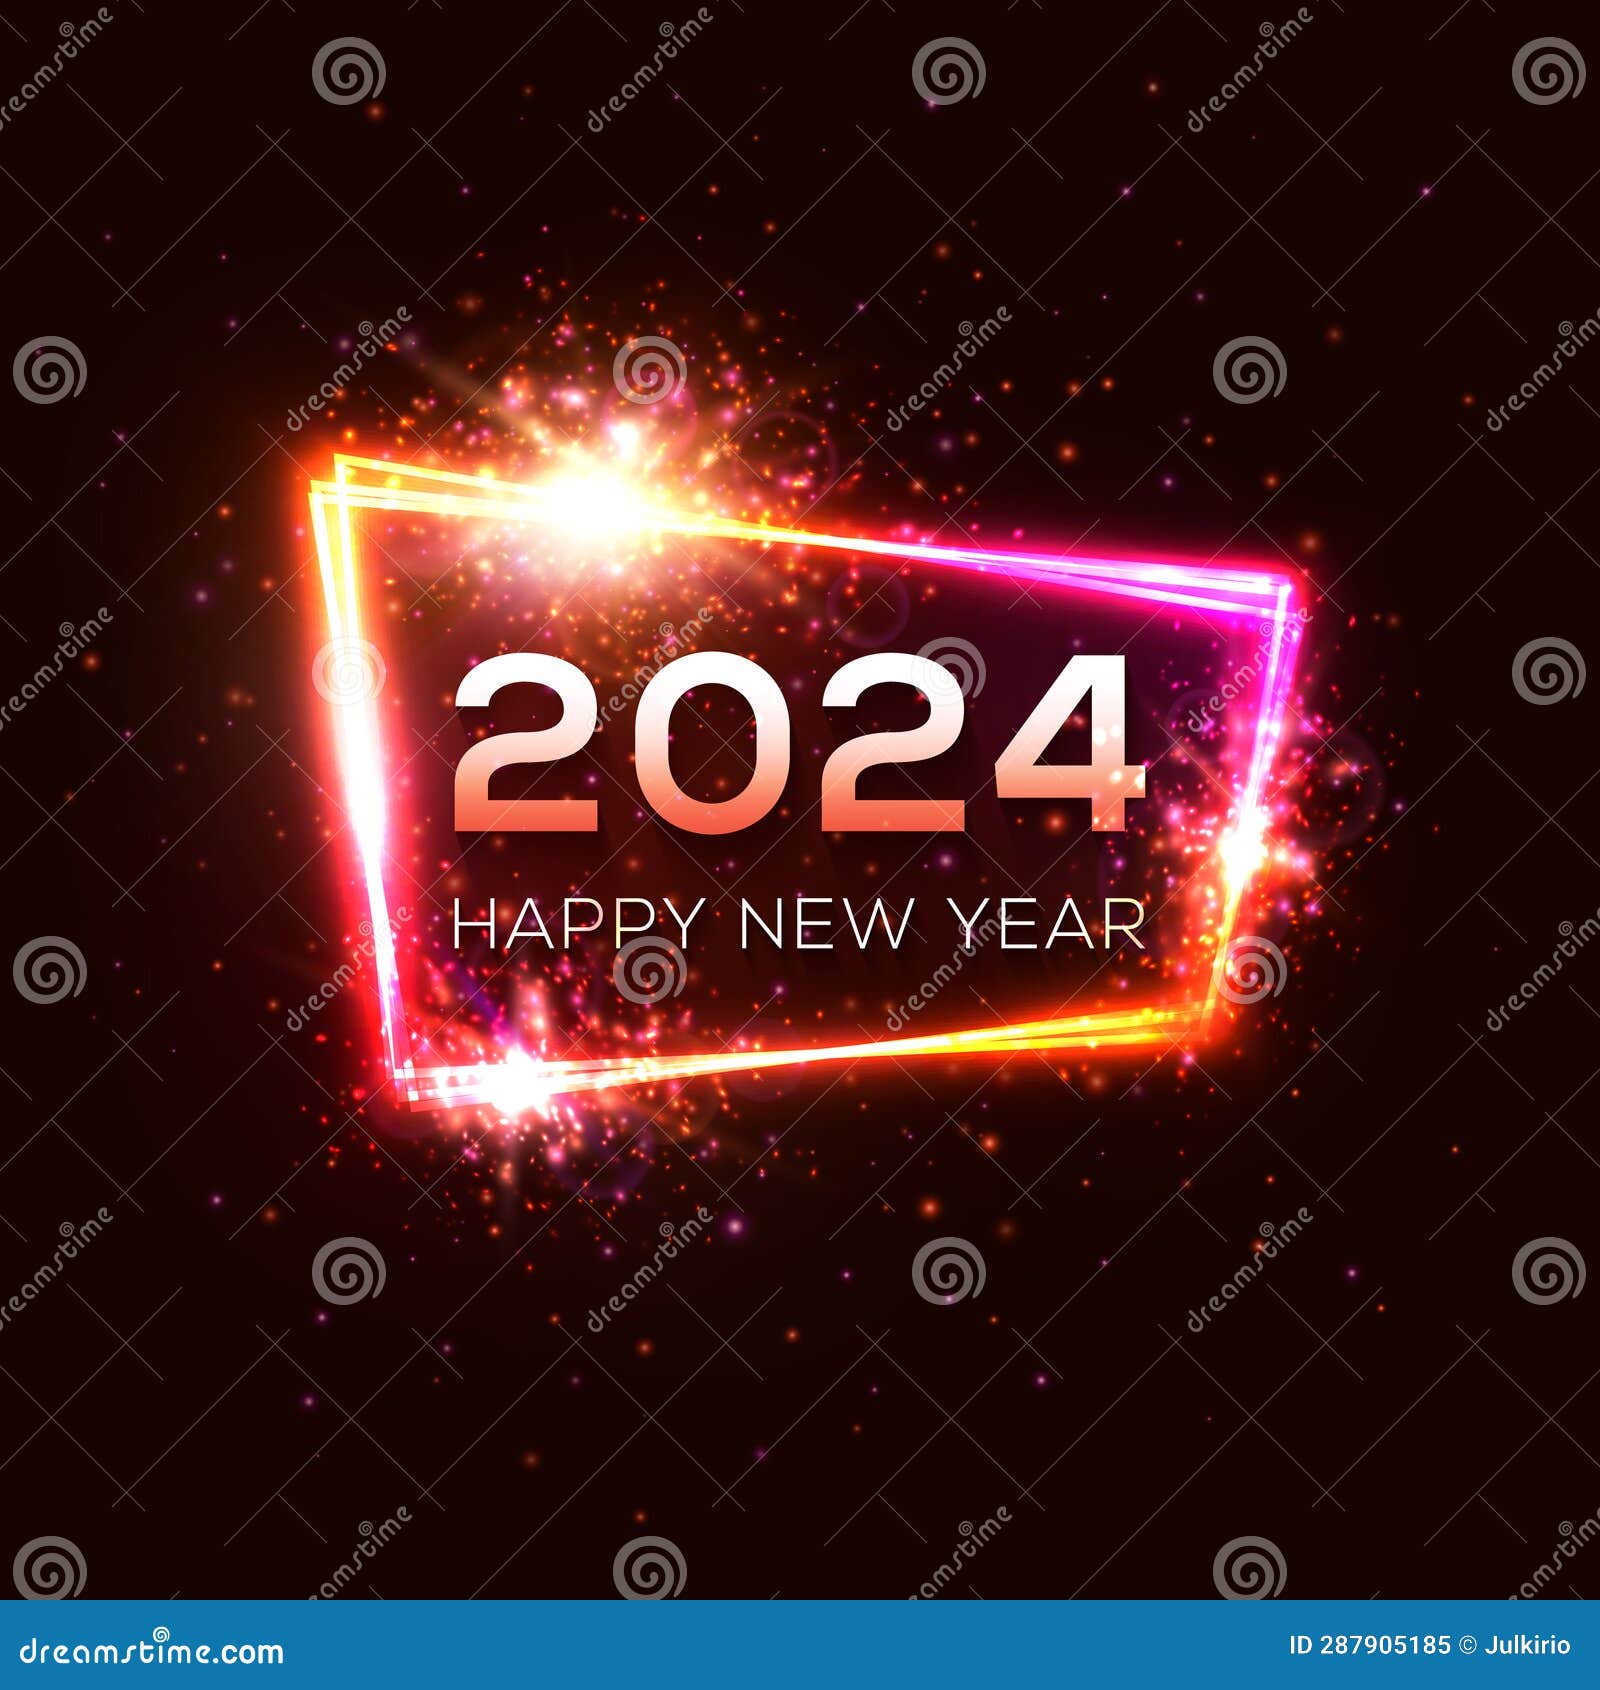 Happy New Year 2024 Neon Light Rectangle Frame. Stock Illustration ...